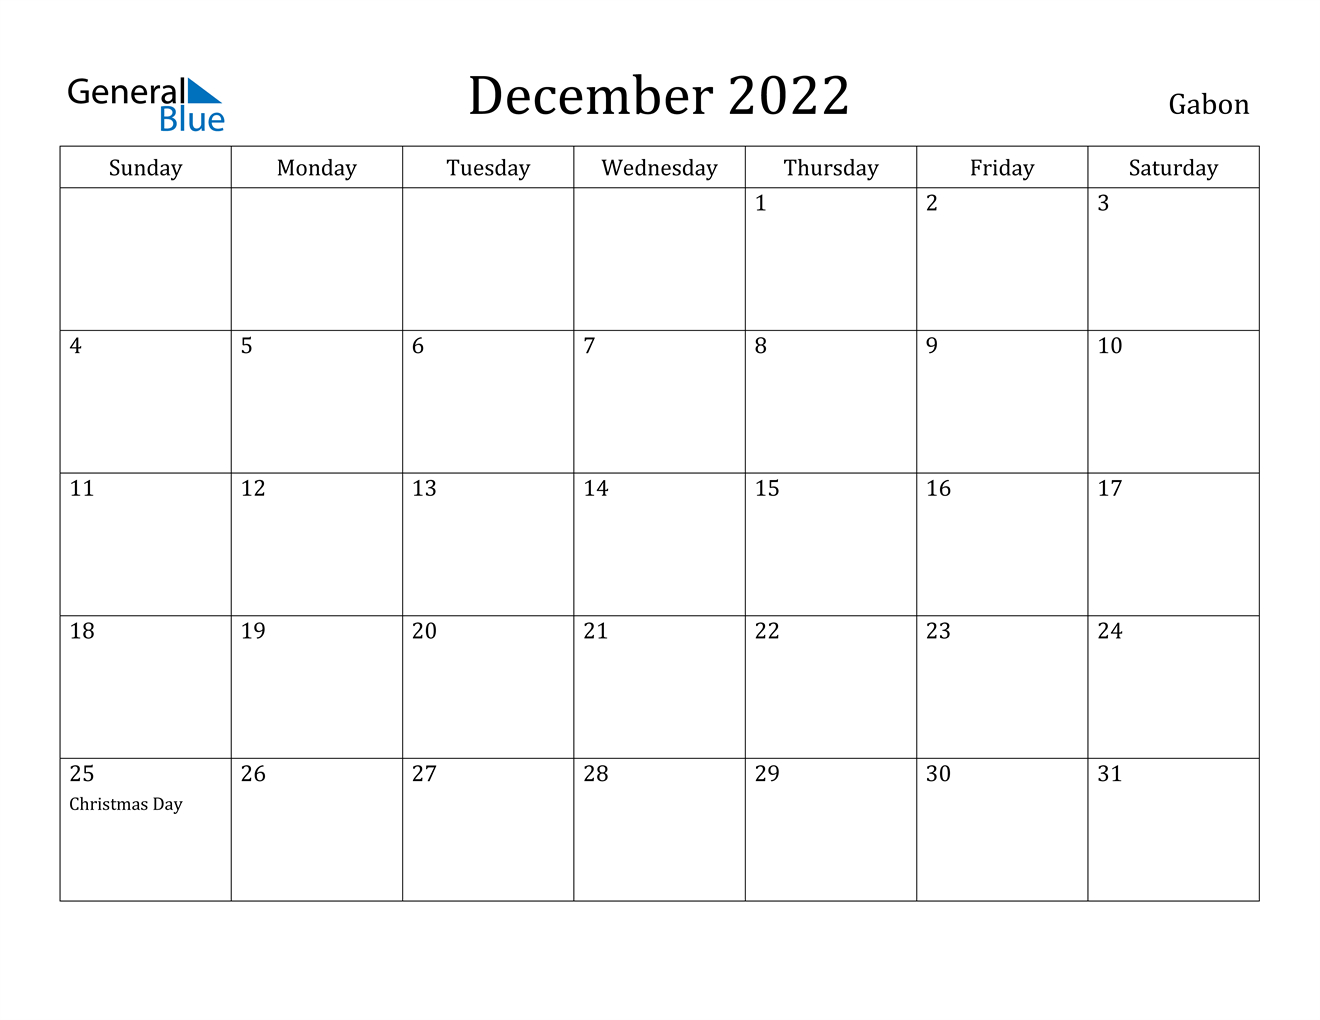 December 2022 Calendar - Gabon  December 2022 Through February 2022 Calendar